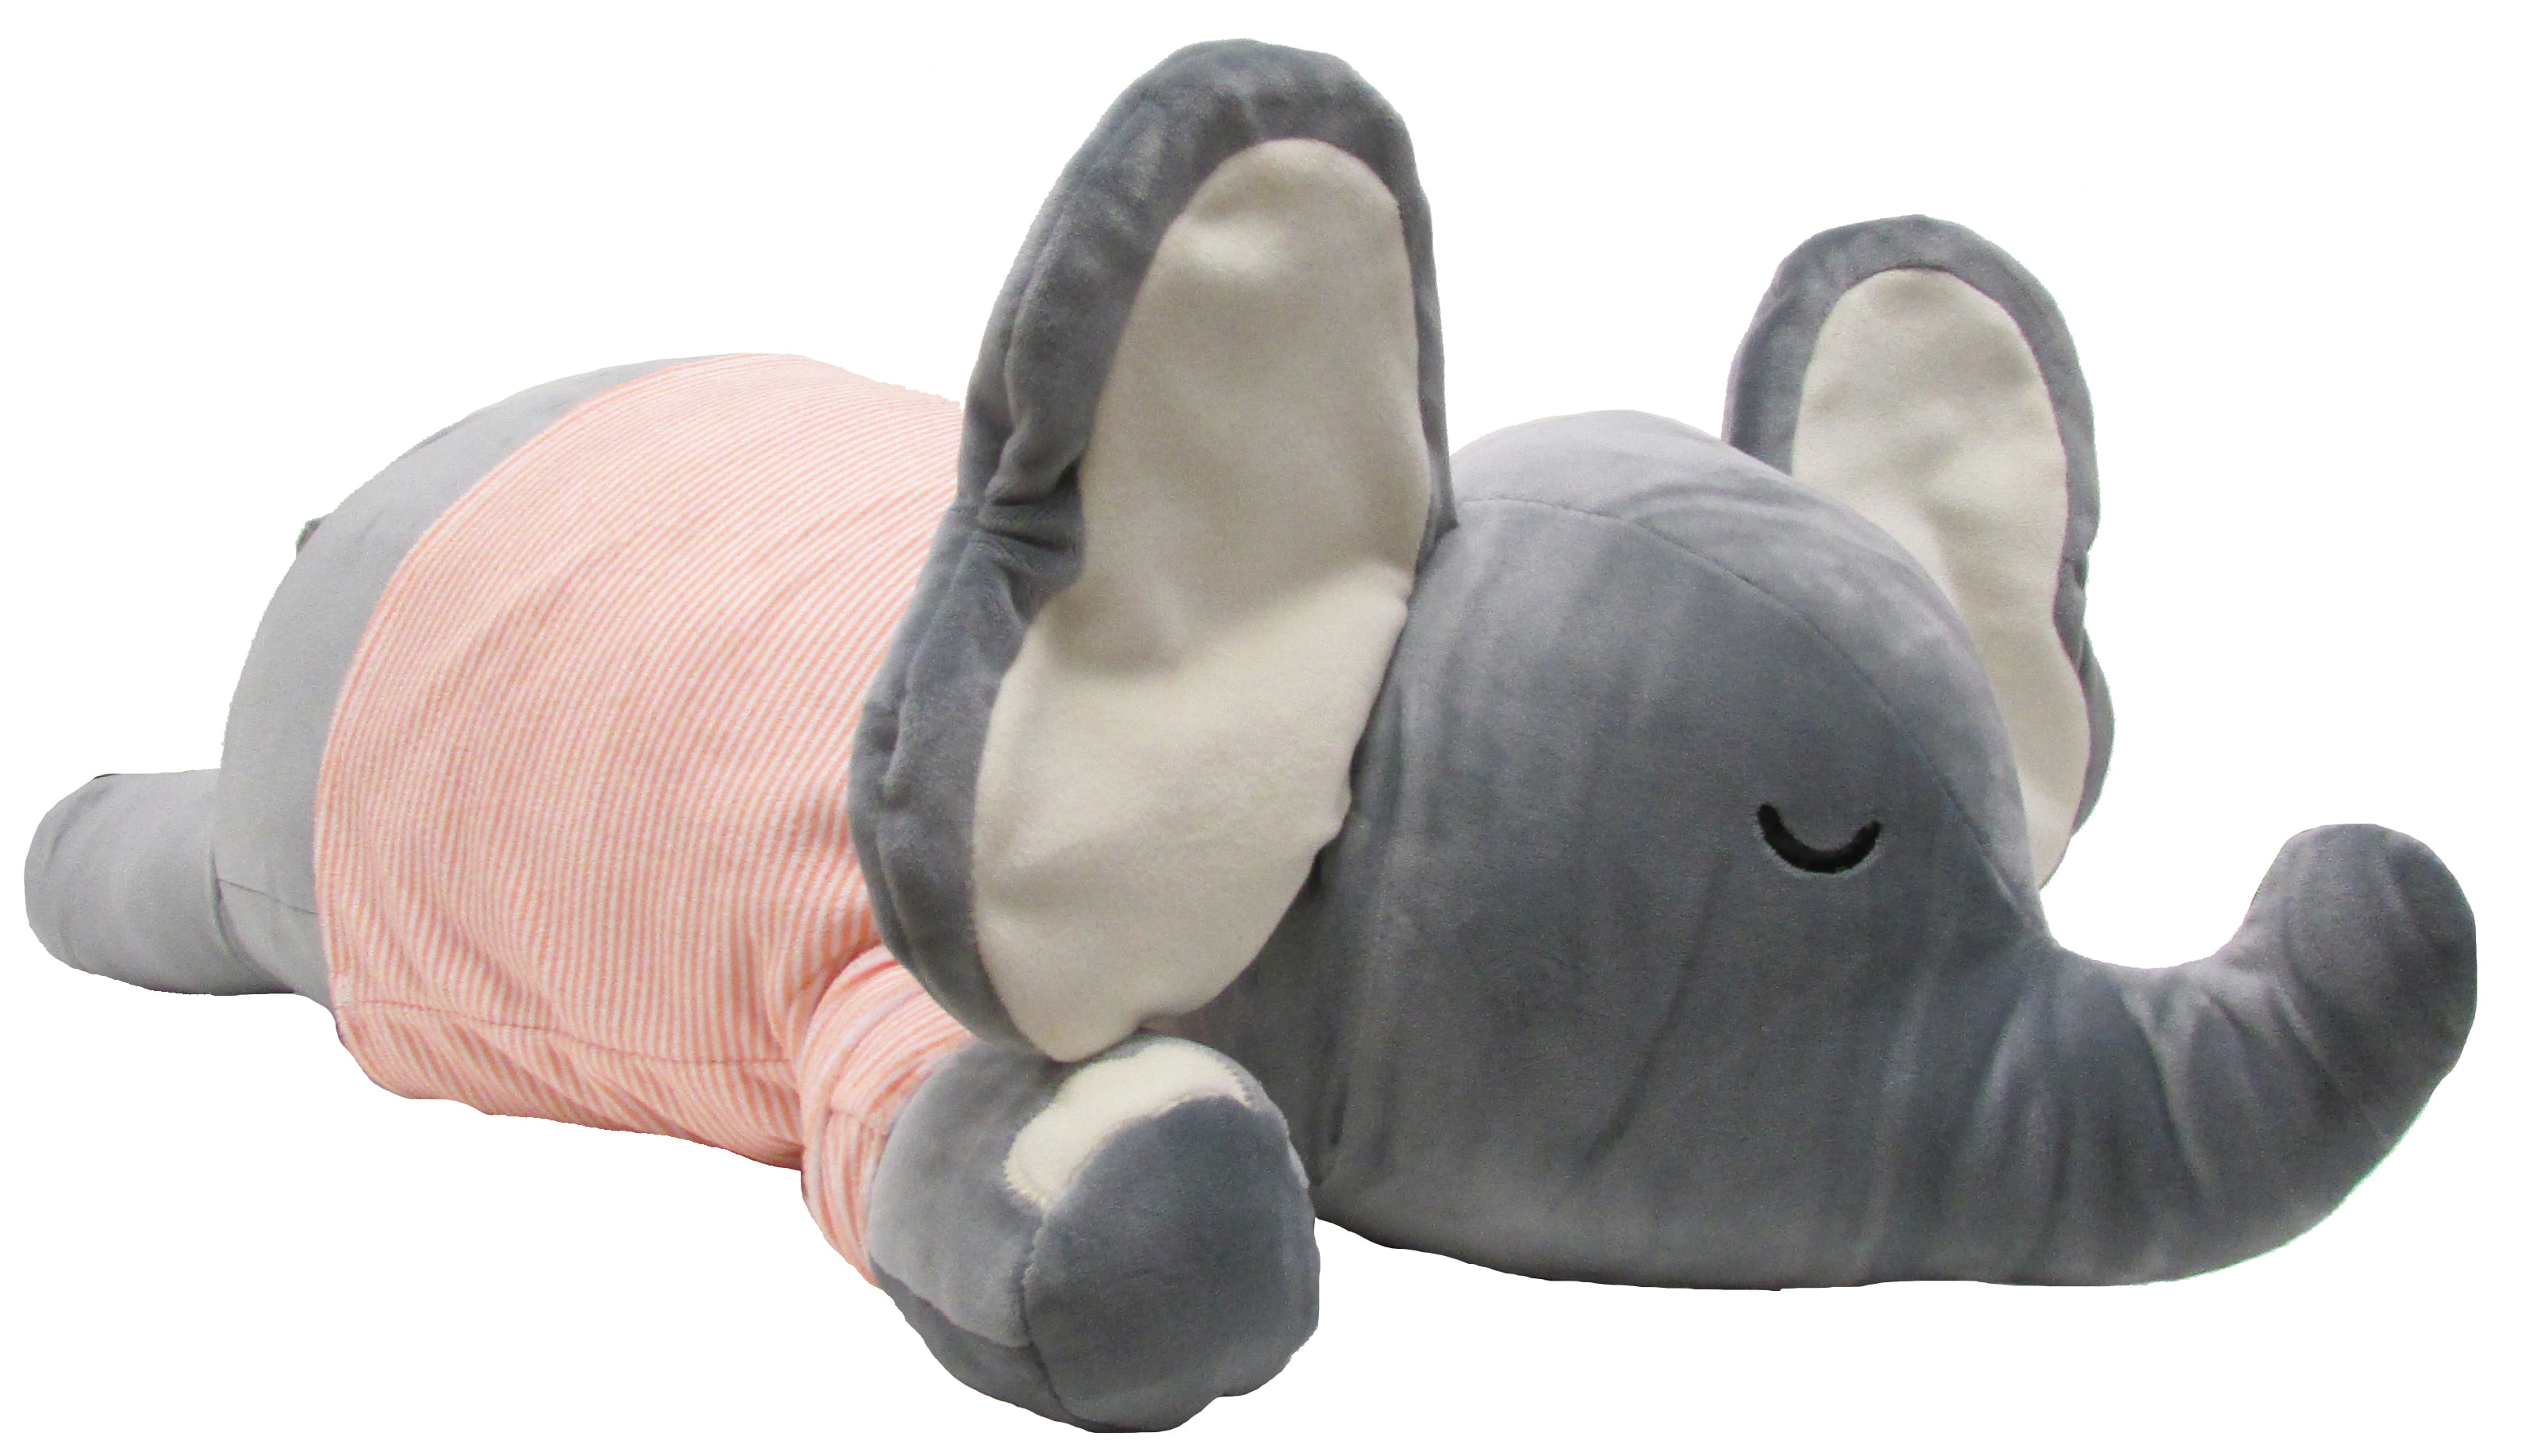 Cuddle Pals Slate the Elephant Sleepy Cuddles Plus